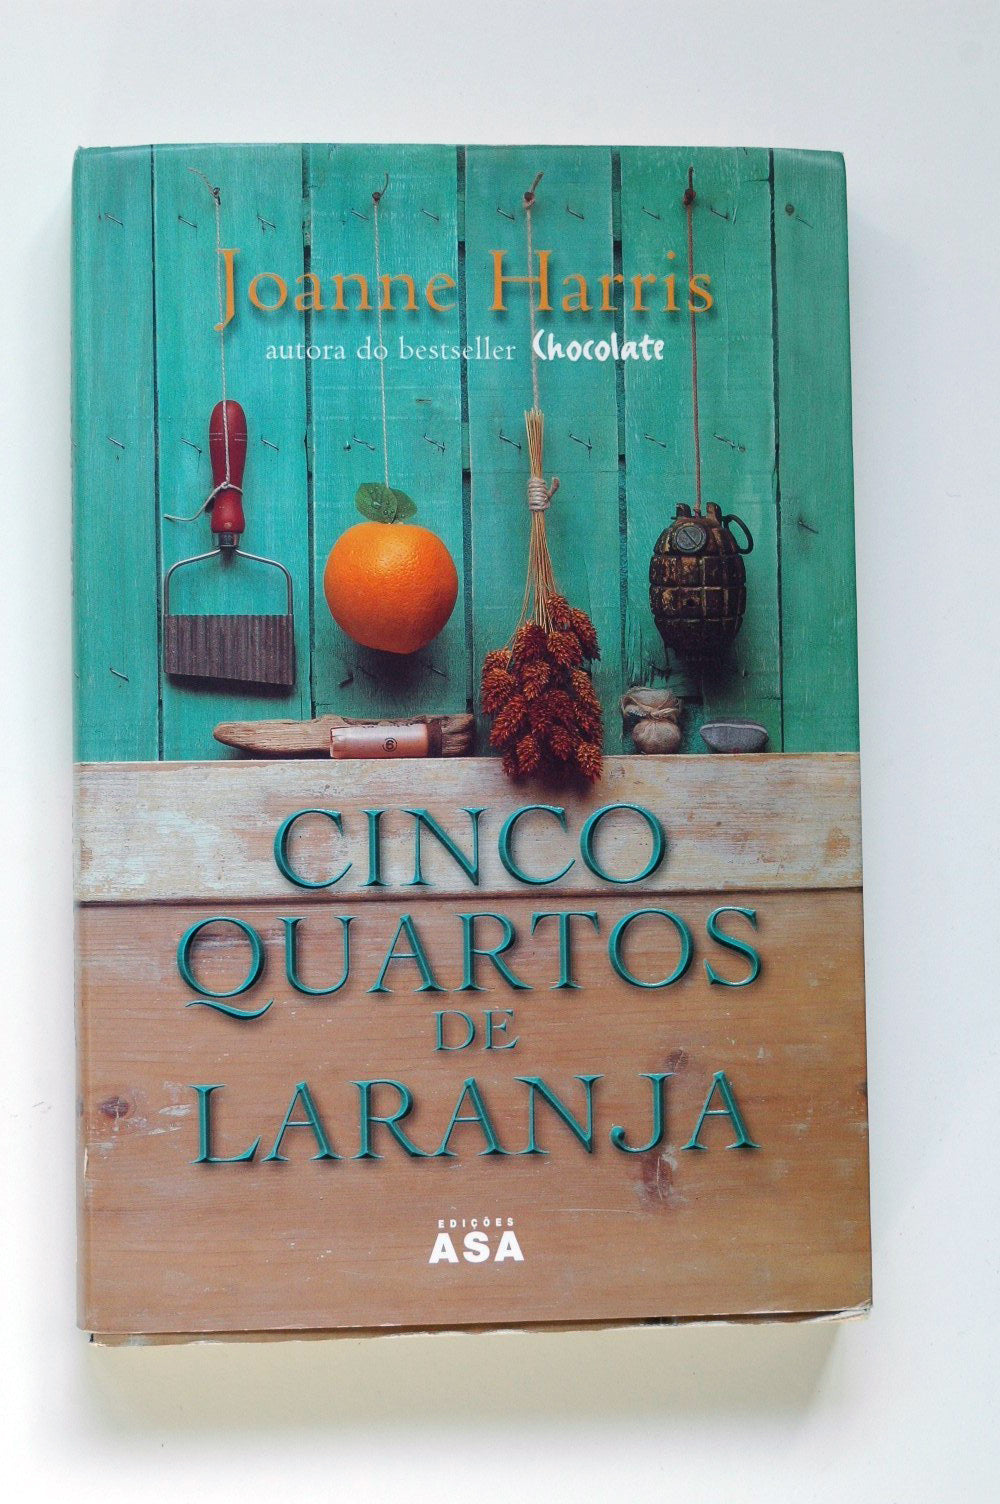 LIVRO Cinco Quartos de Laranja de Joanne Harris - USADO